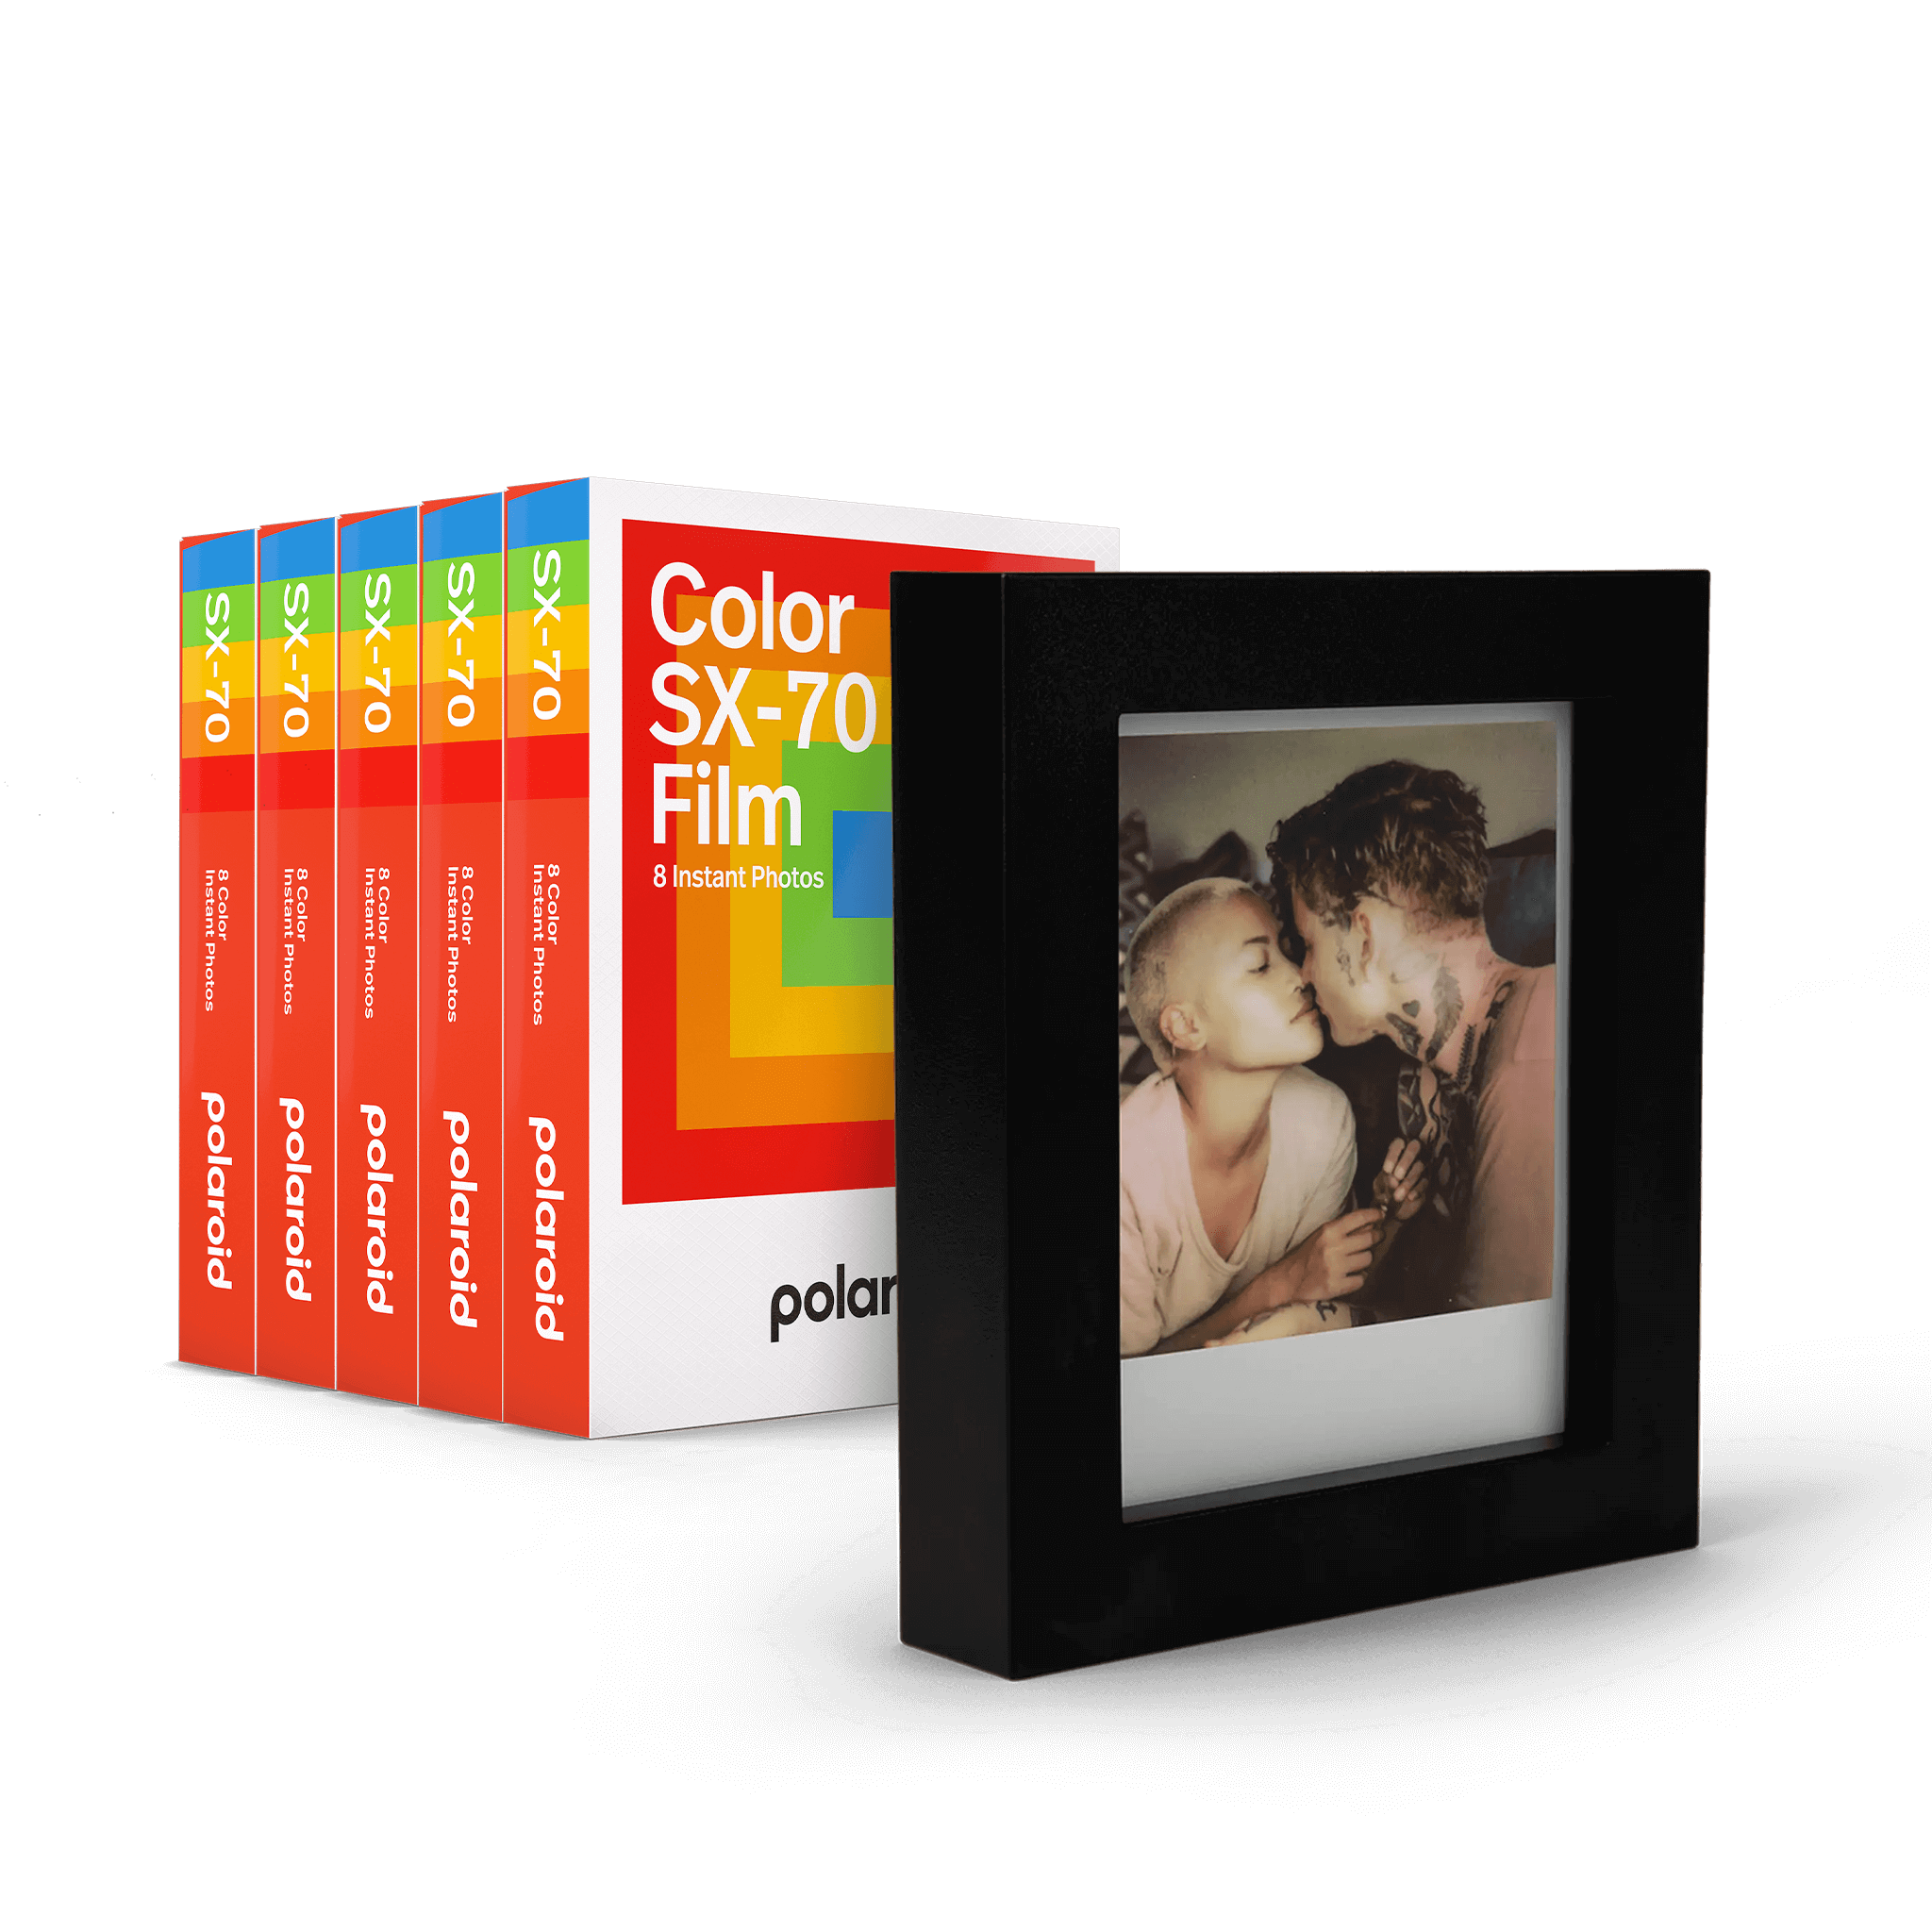 Polaroid Colour / Color Instant Film for Polaroid SX-70 Cameras Brand-new  Stock Classic White Frame 